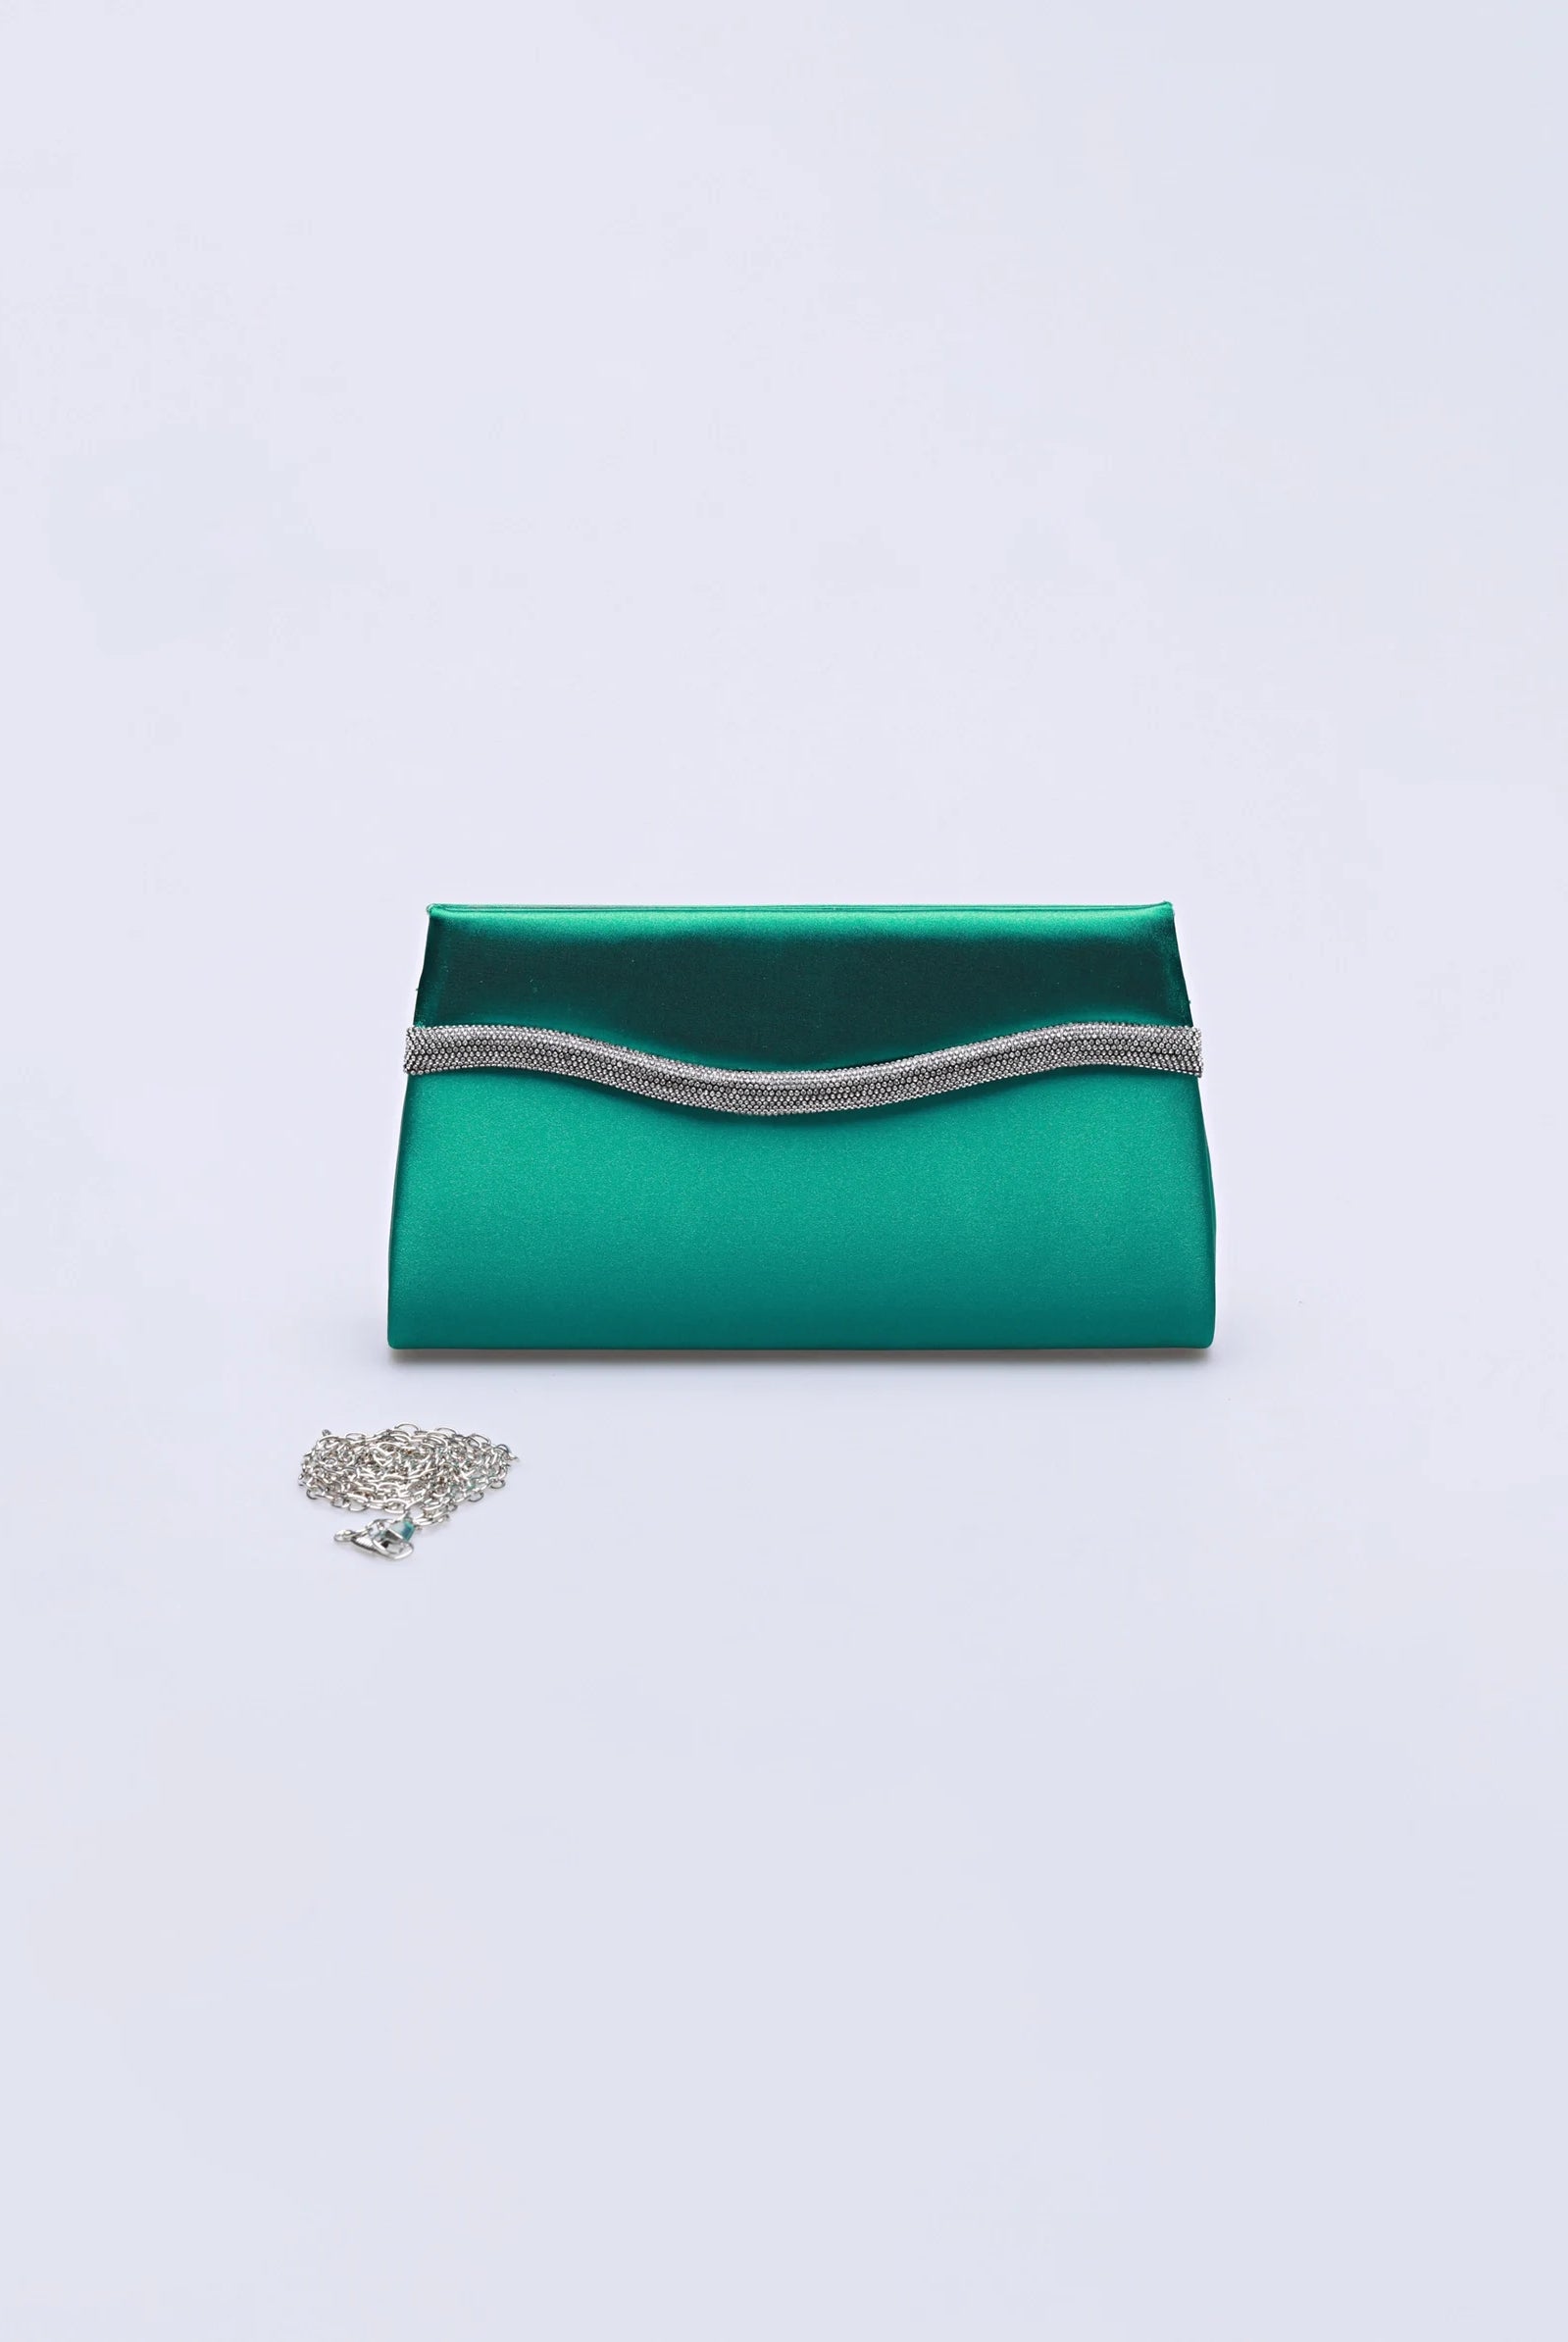 diamente detailed green satin clutch bag